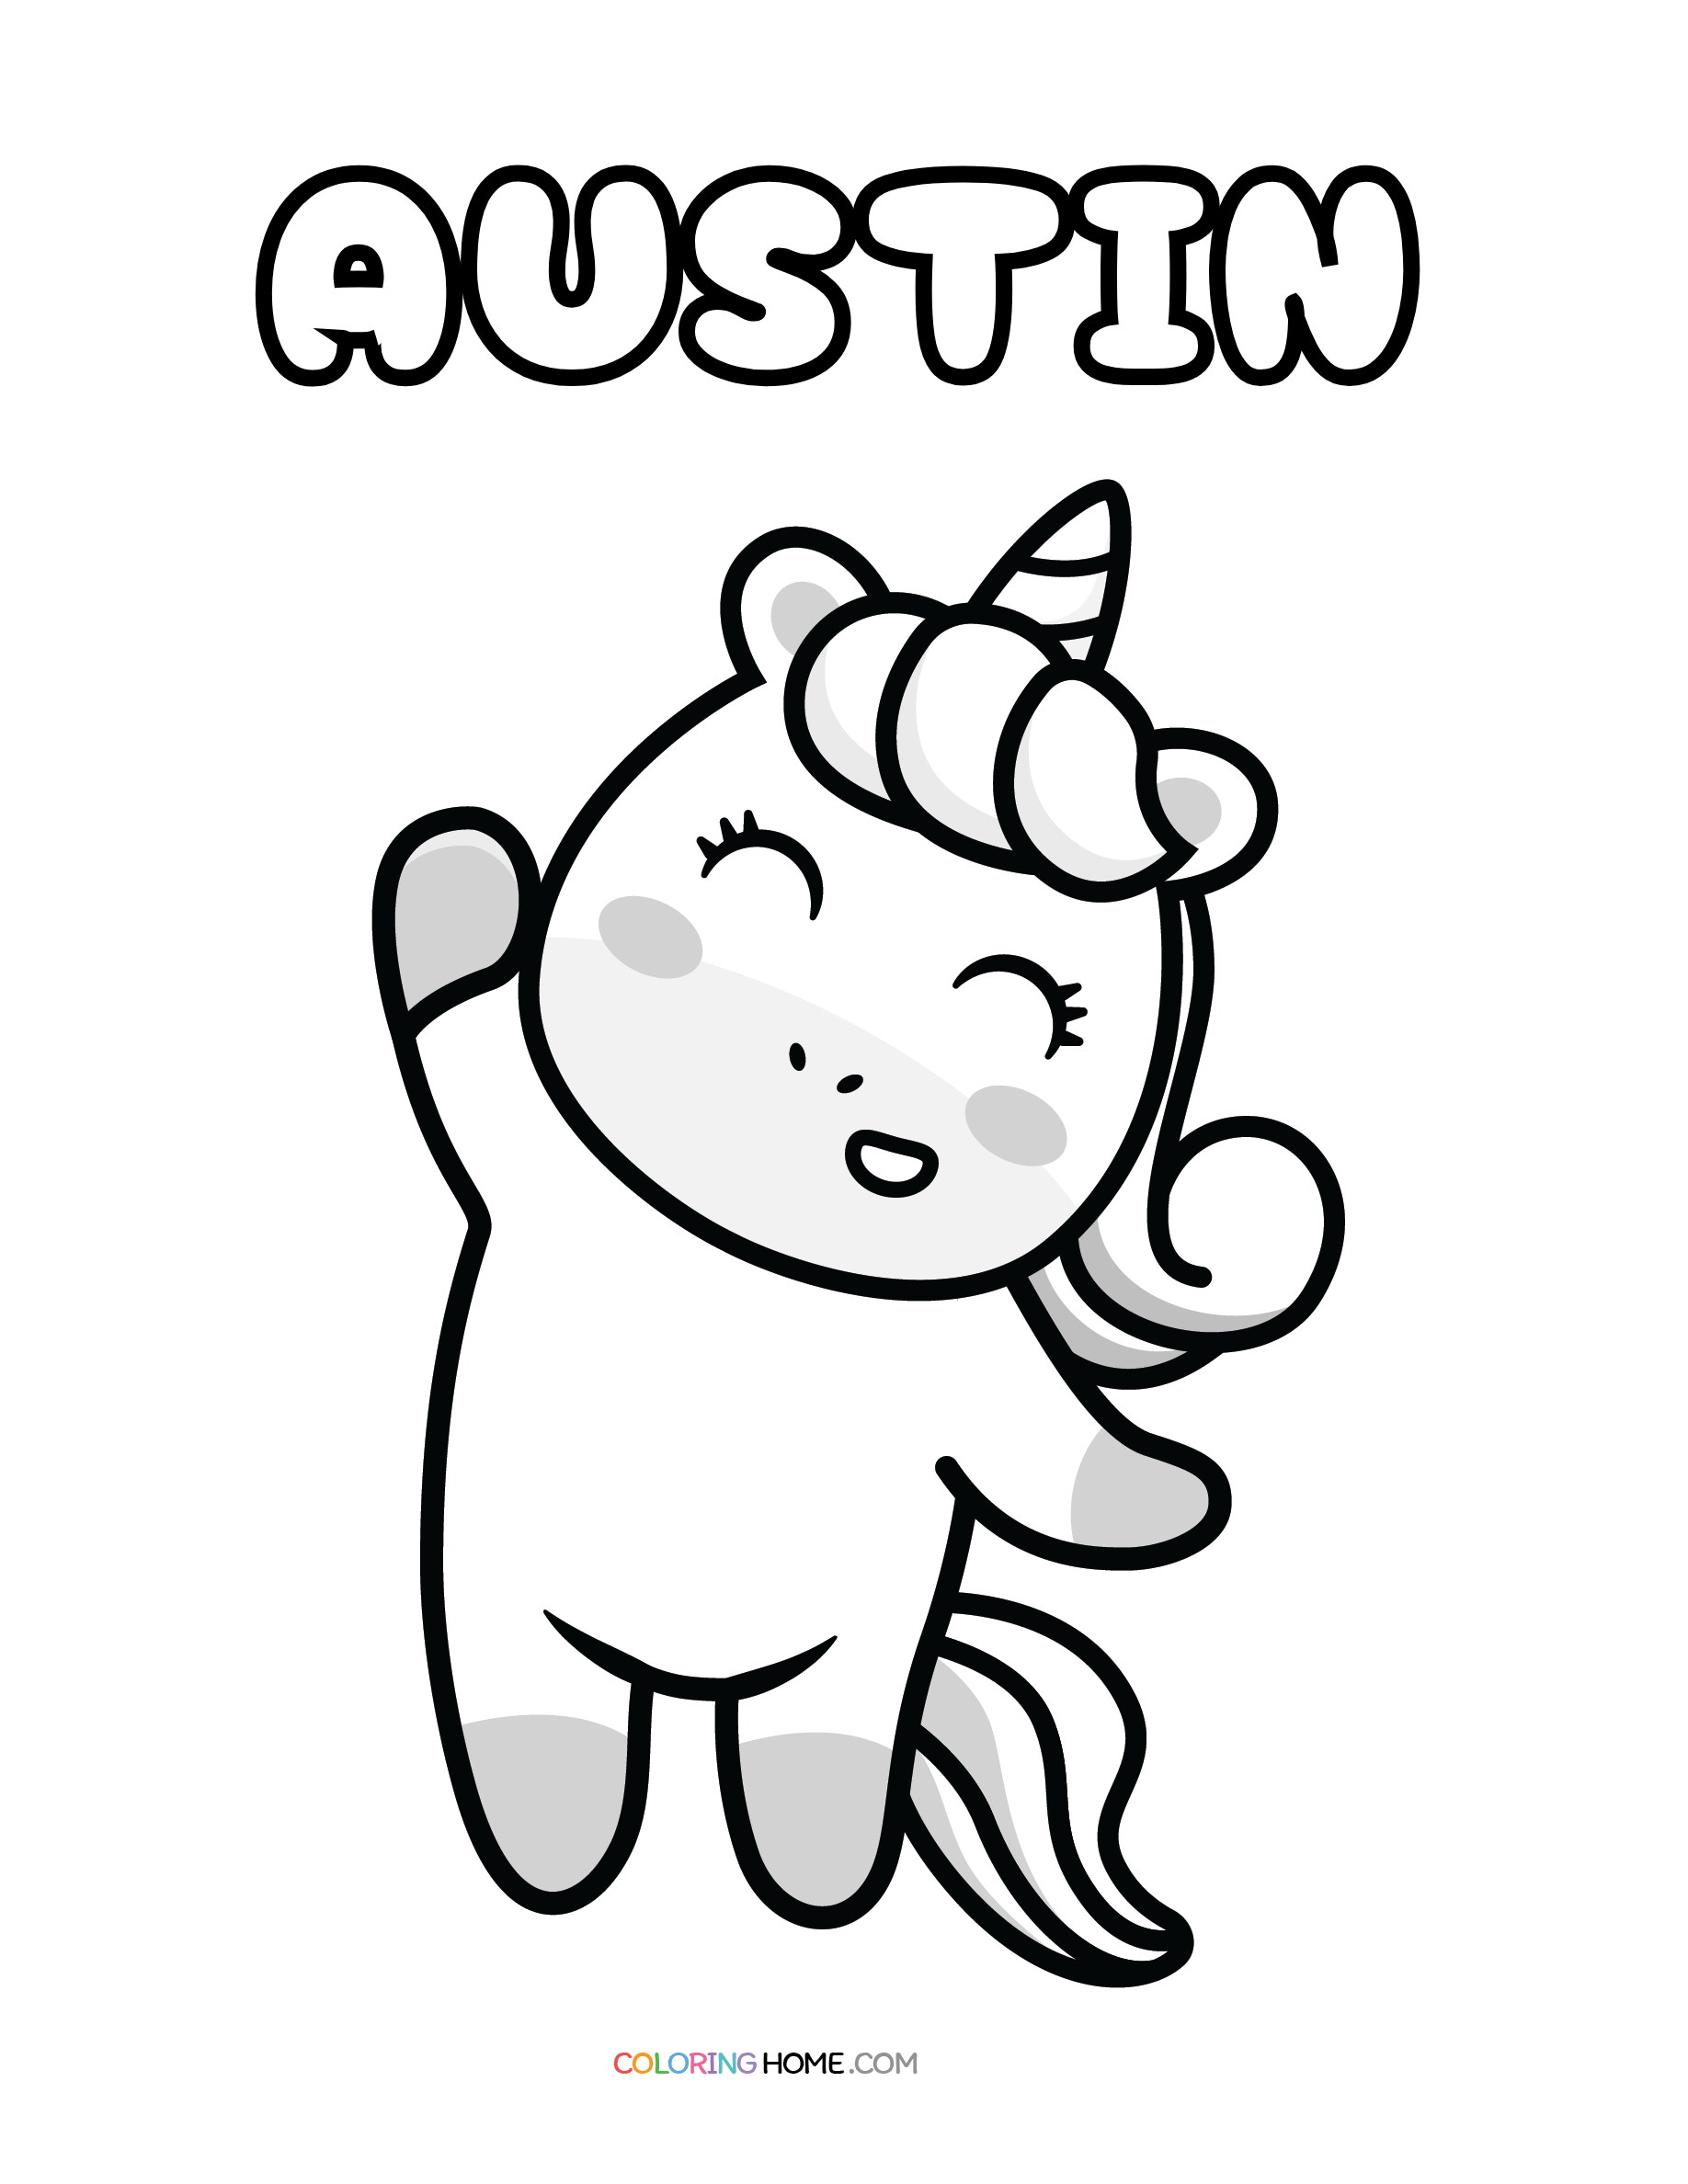 Austin unicorn coloring page